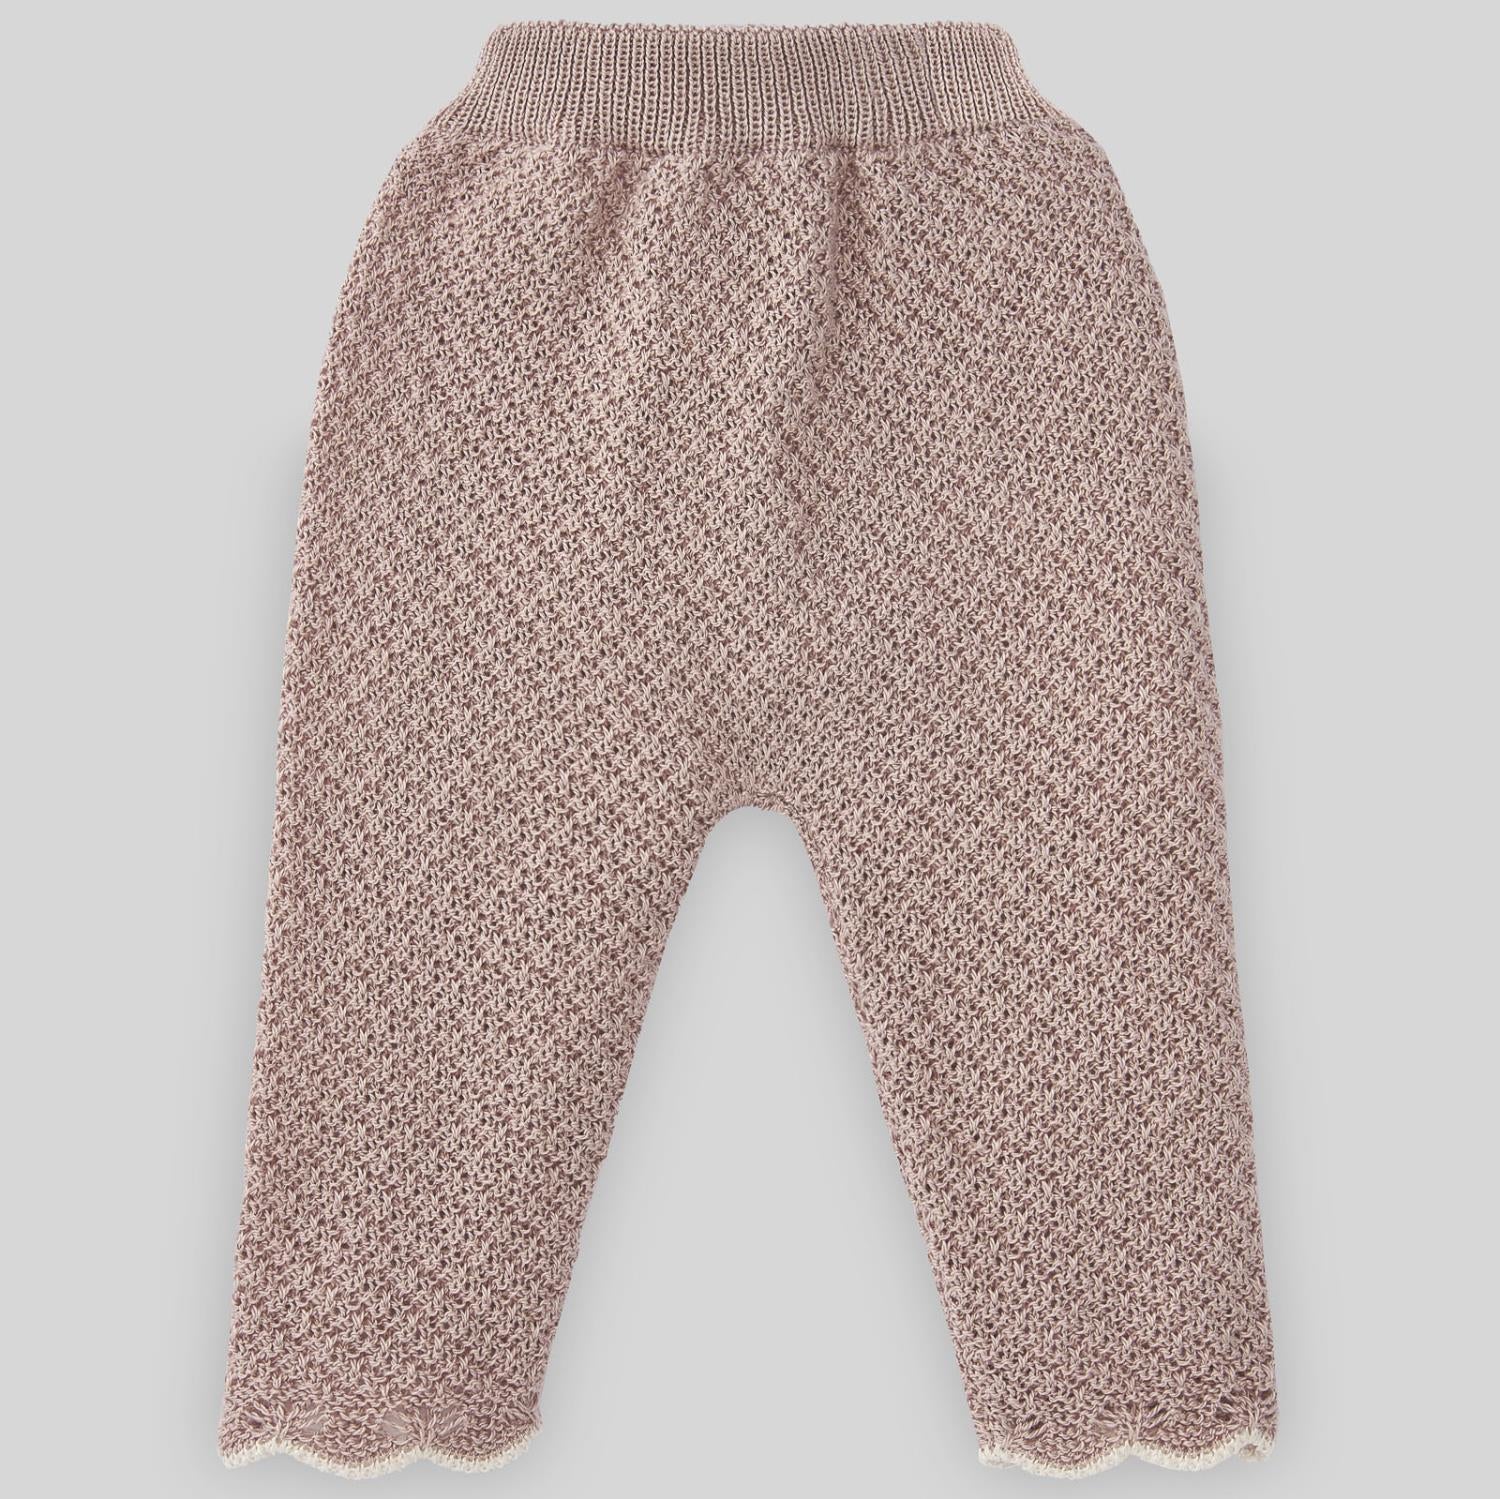 Bukse Knit Pio Pio Cream/Misty Pink